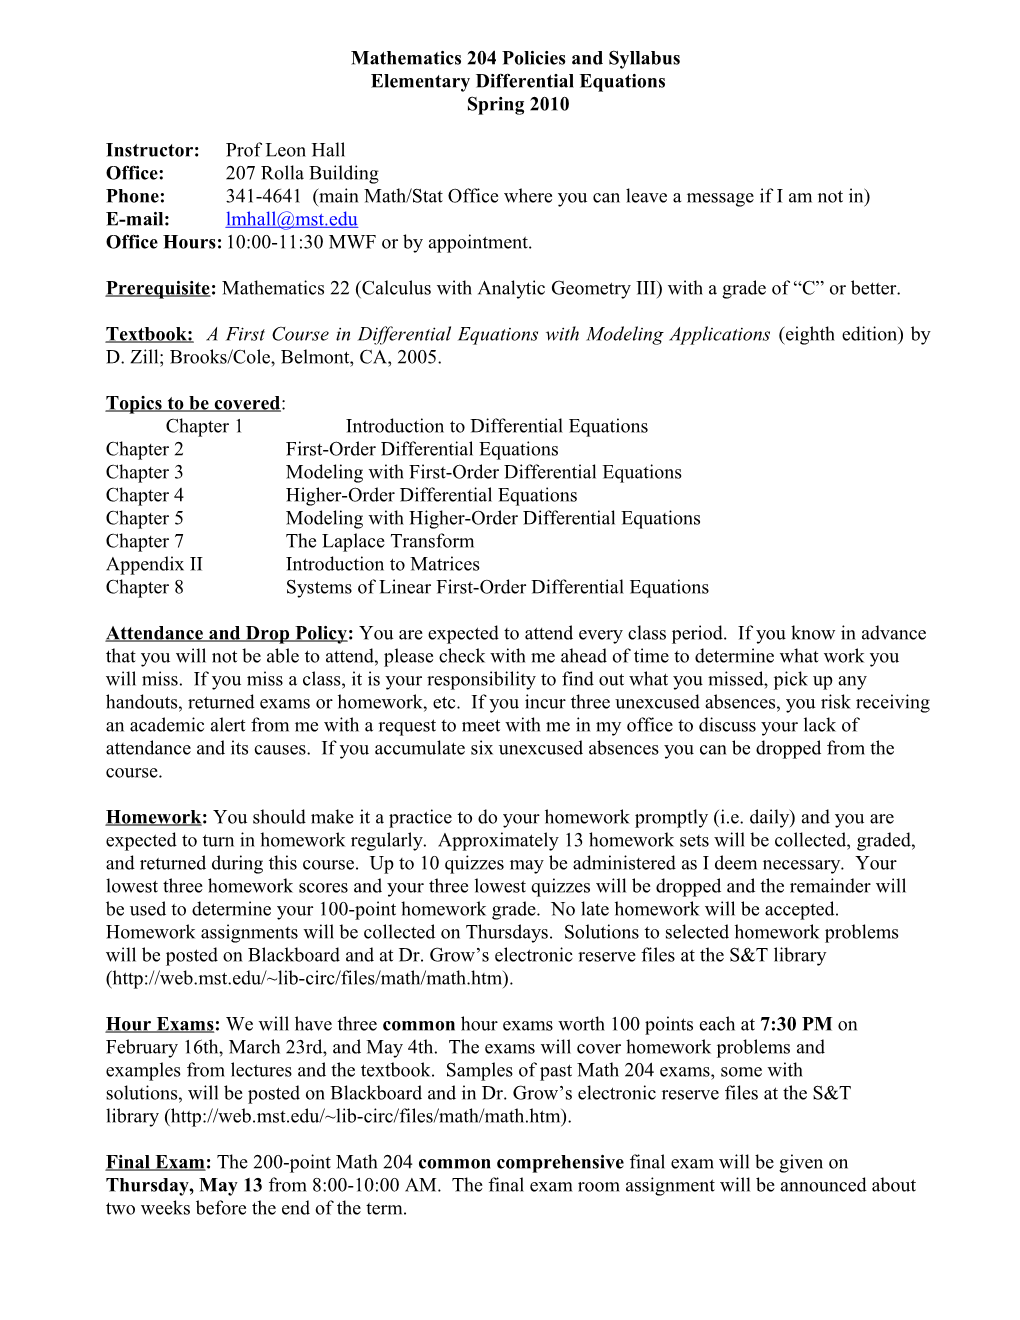 Mathematics 204 Syllabus (Last Revised August 2005)